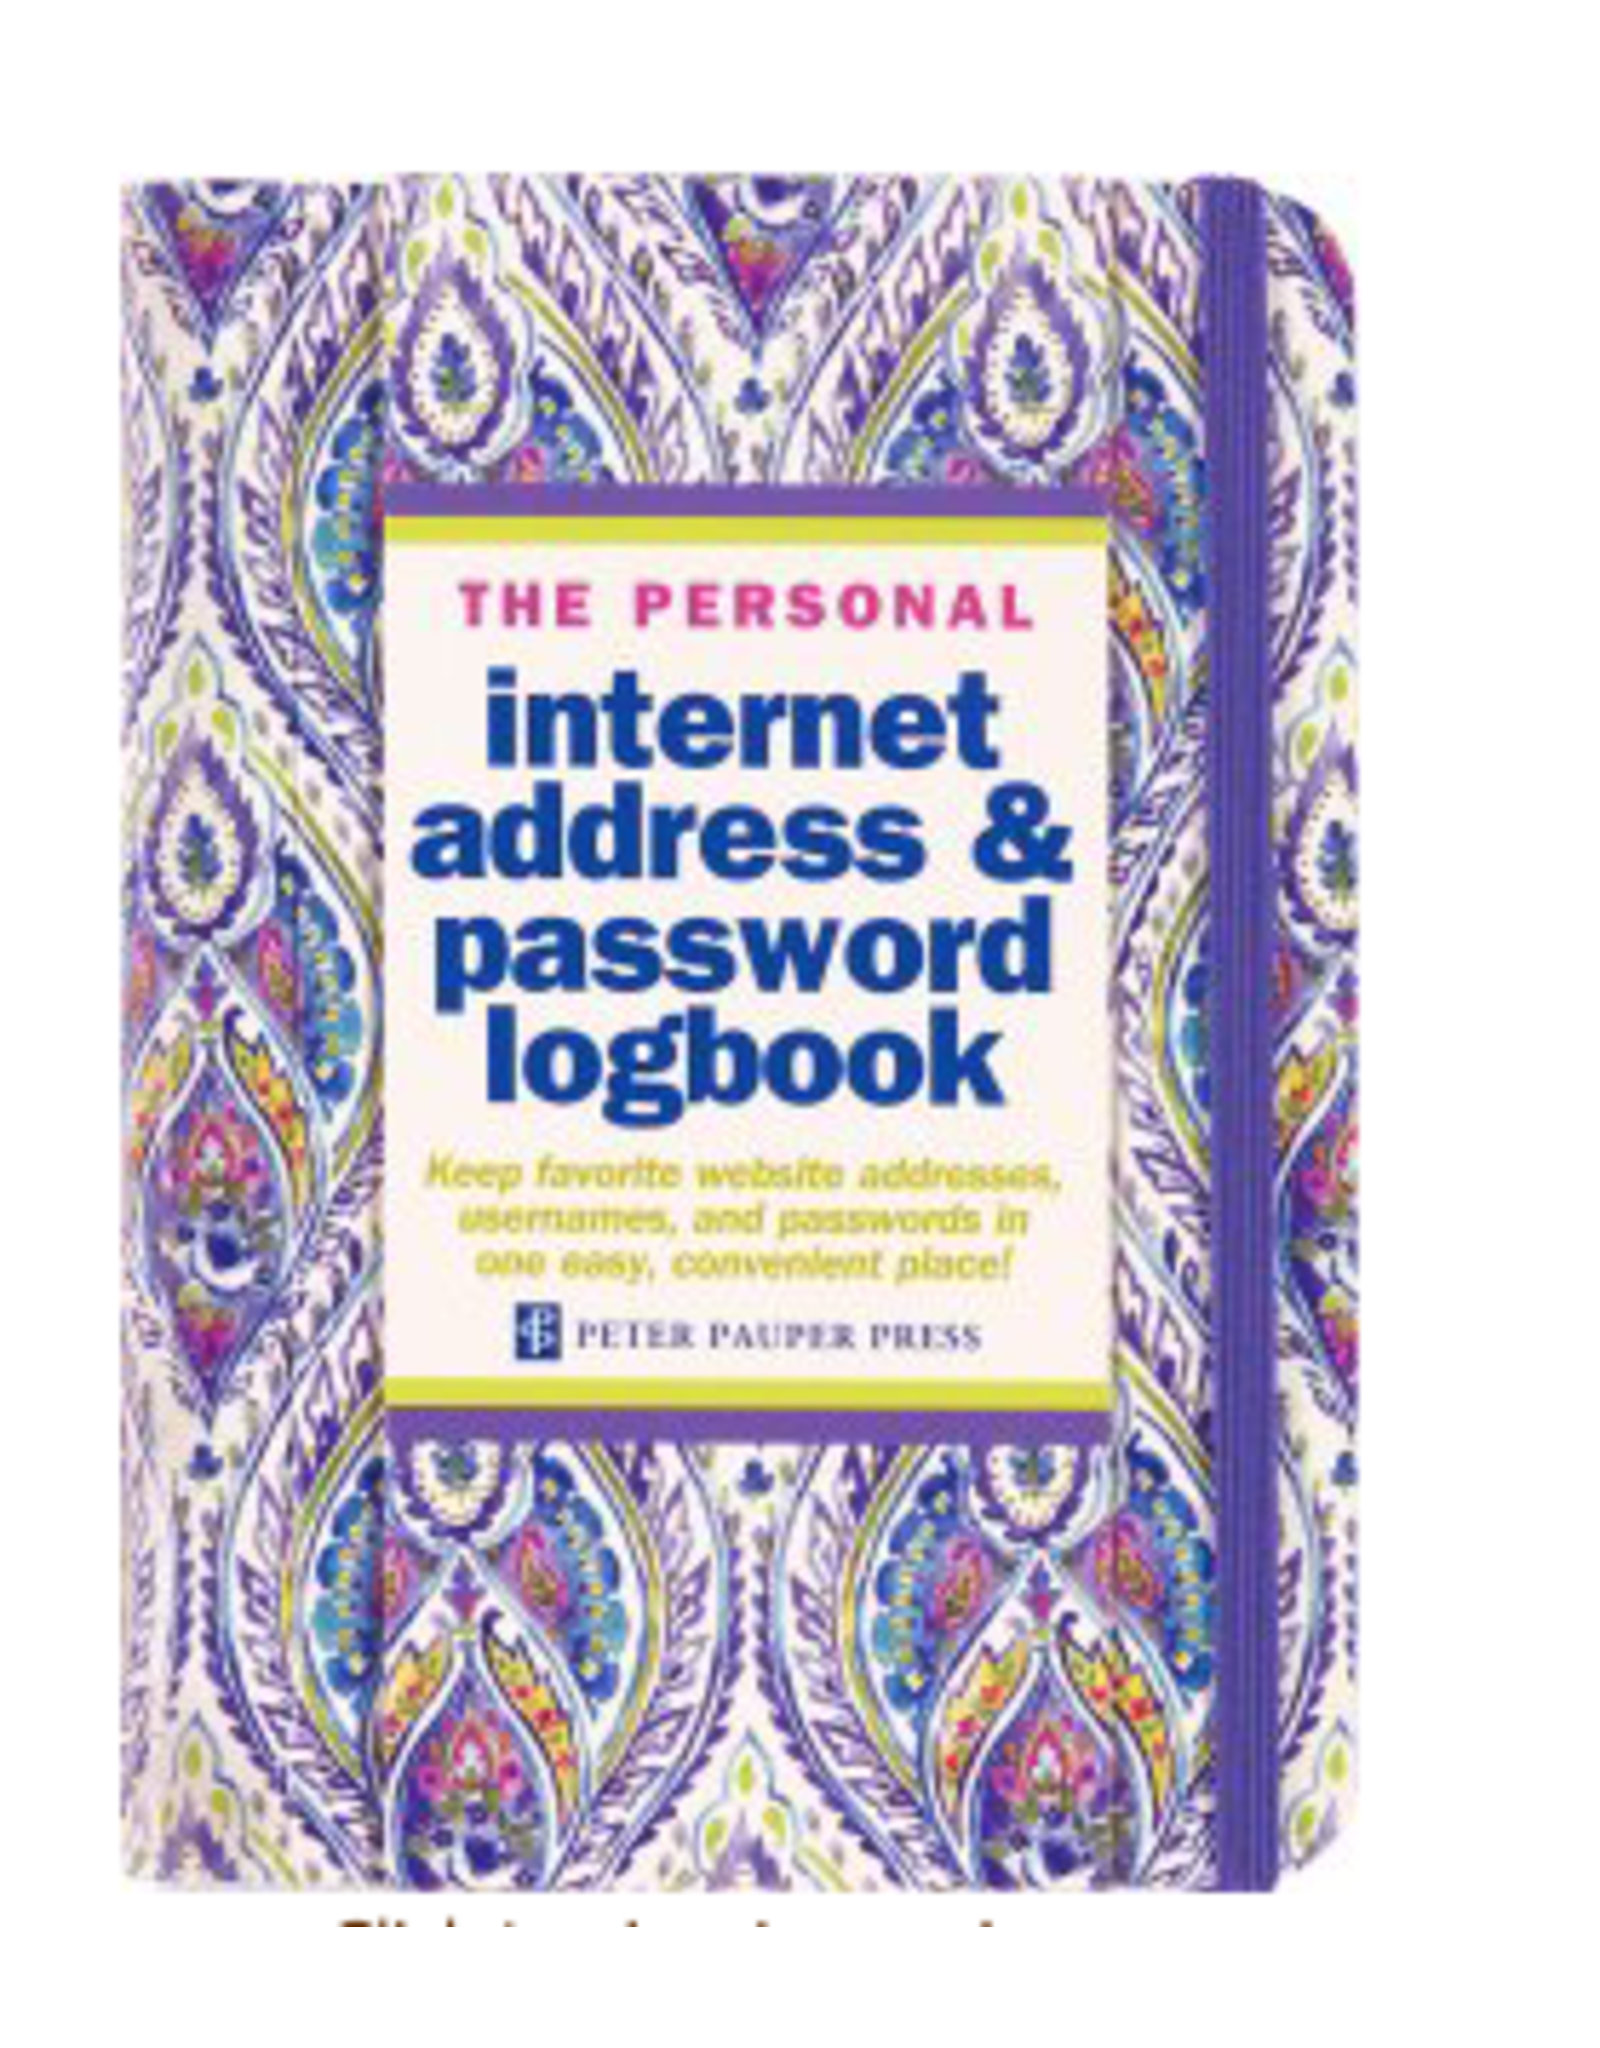 Internet Log Book Silk Road